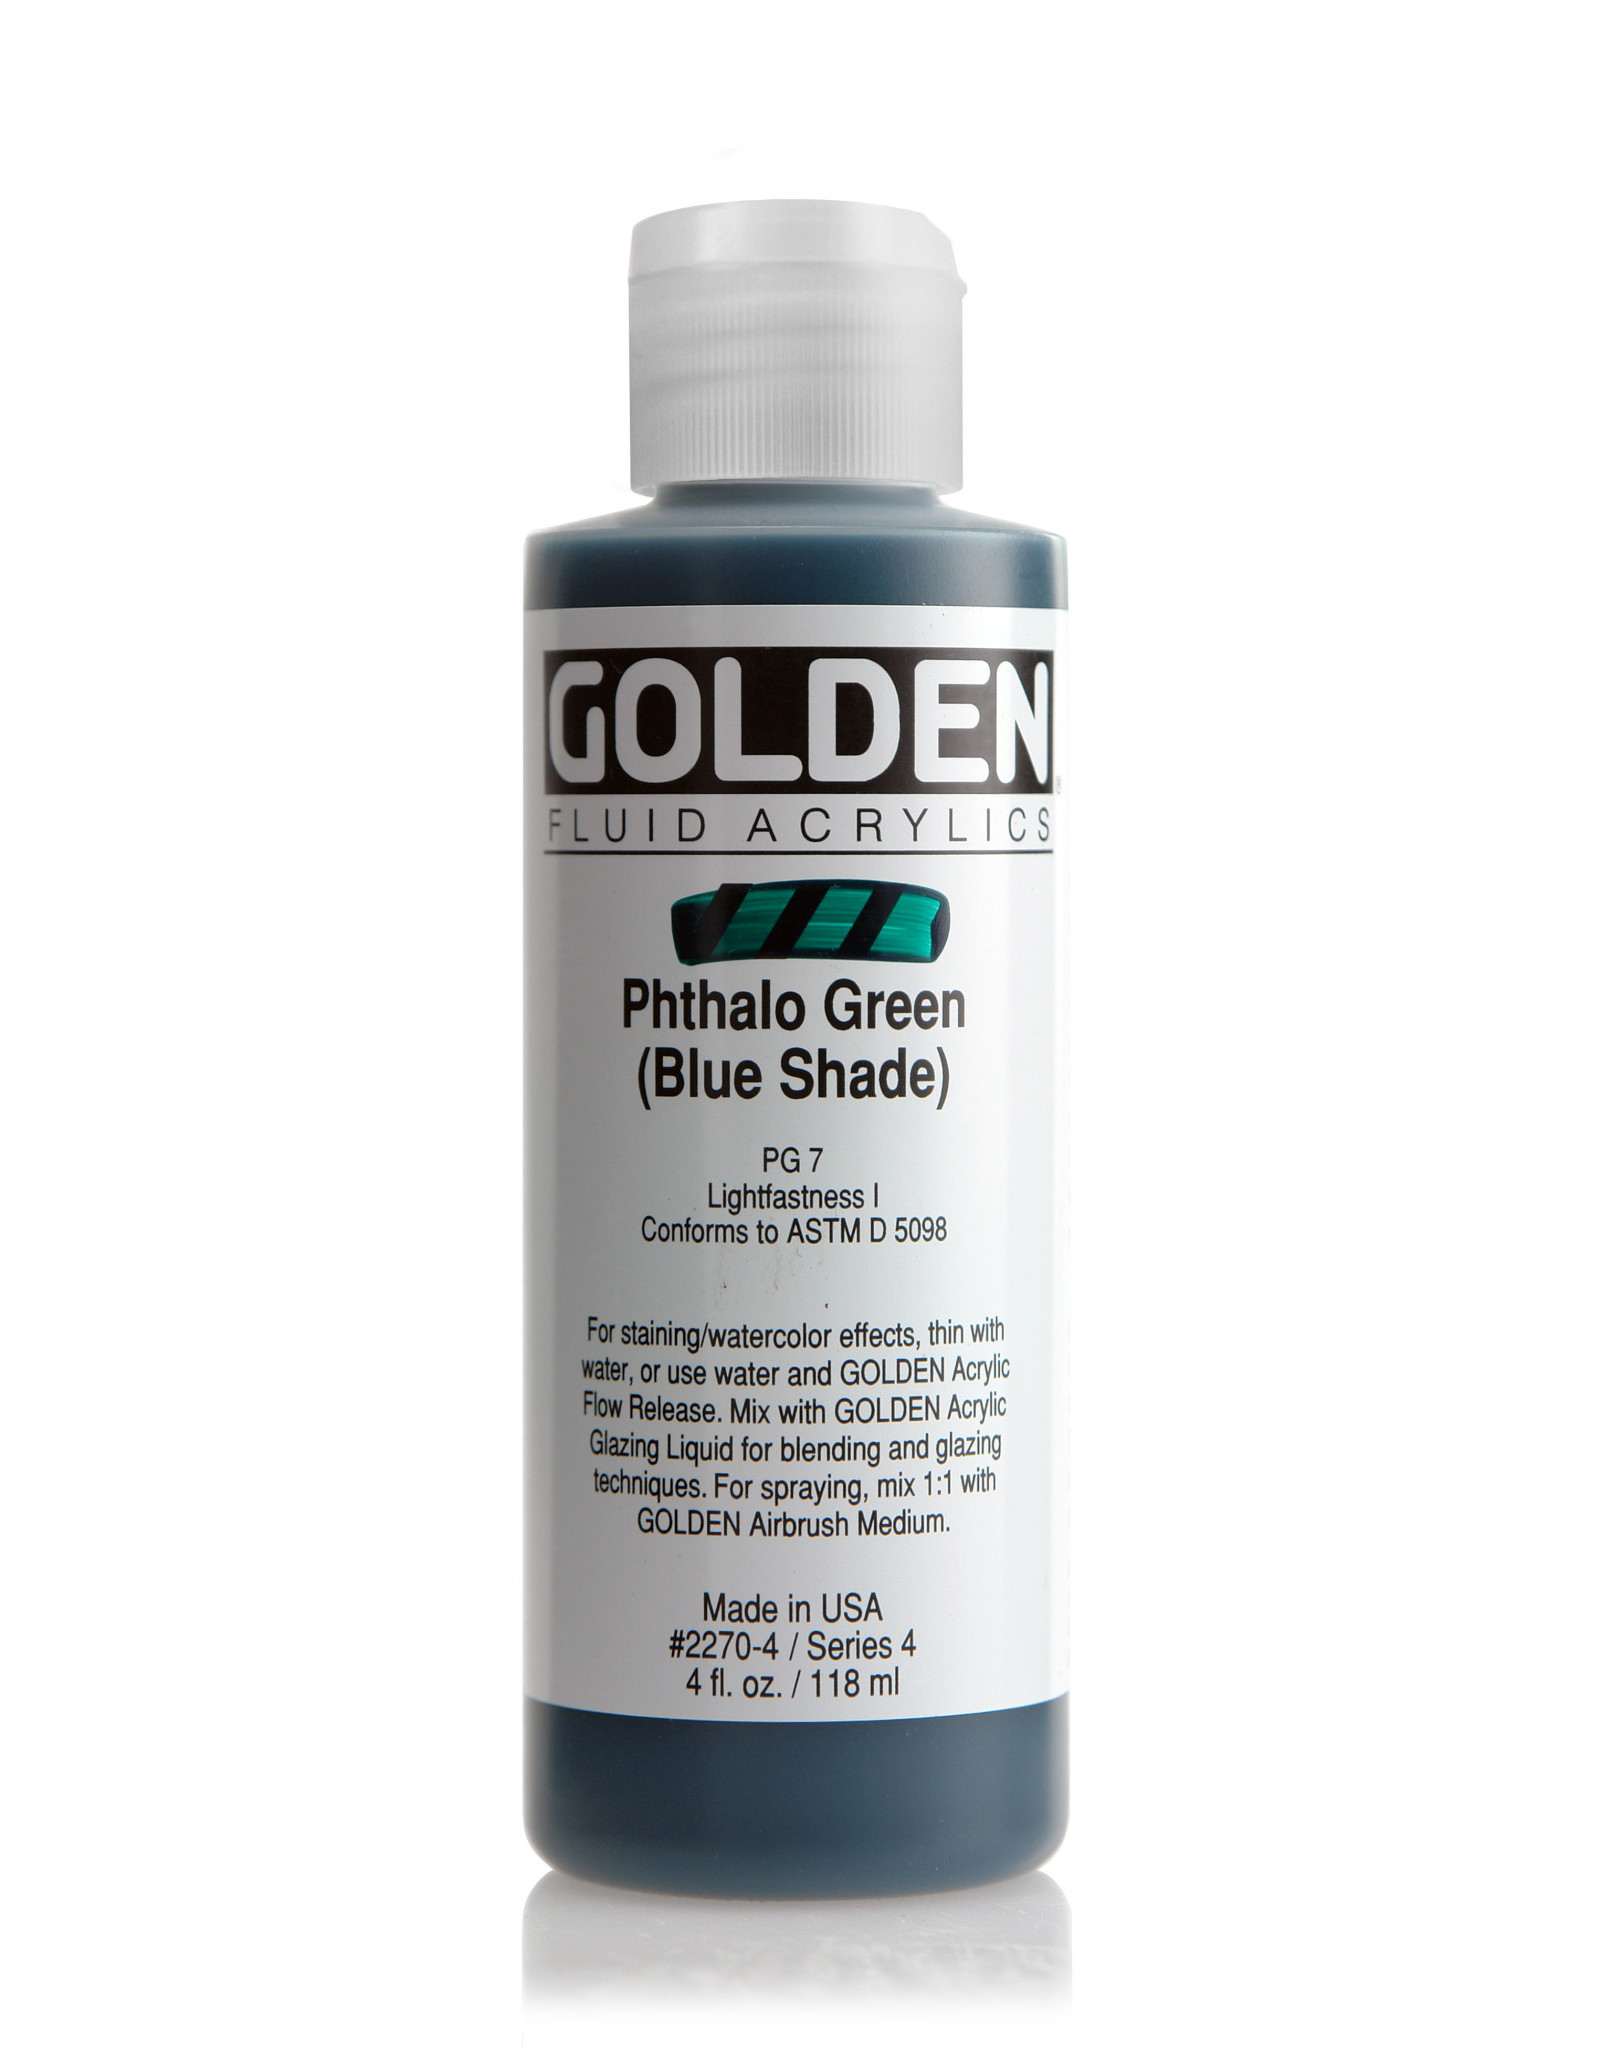 Golden Golden Fluid Acrylics, Phthalo Green (Blue Shade) 4oz Cylinder